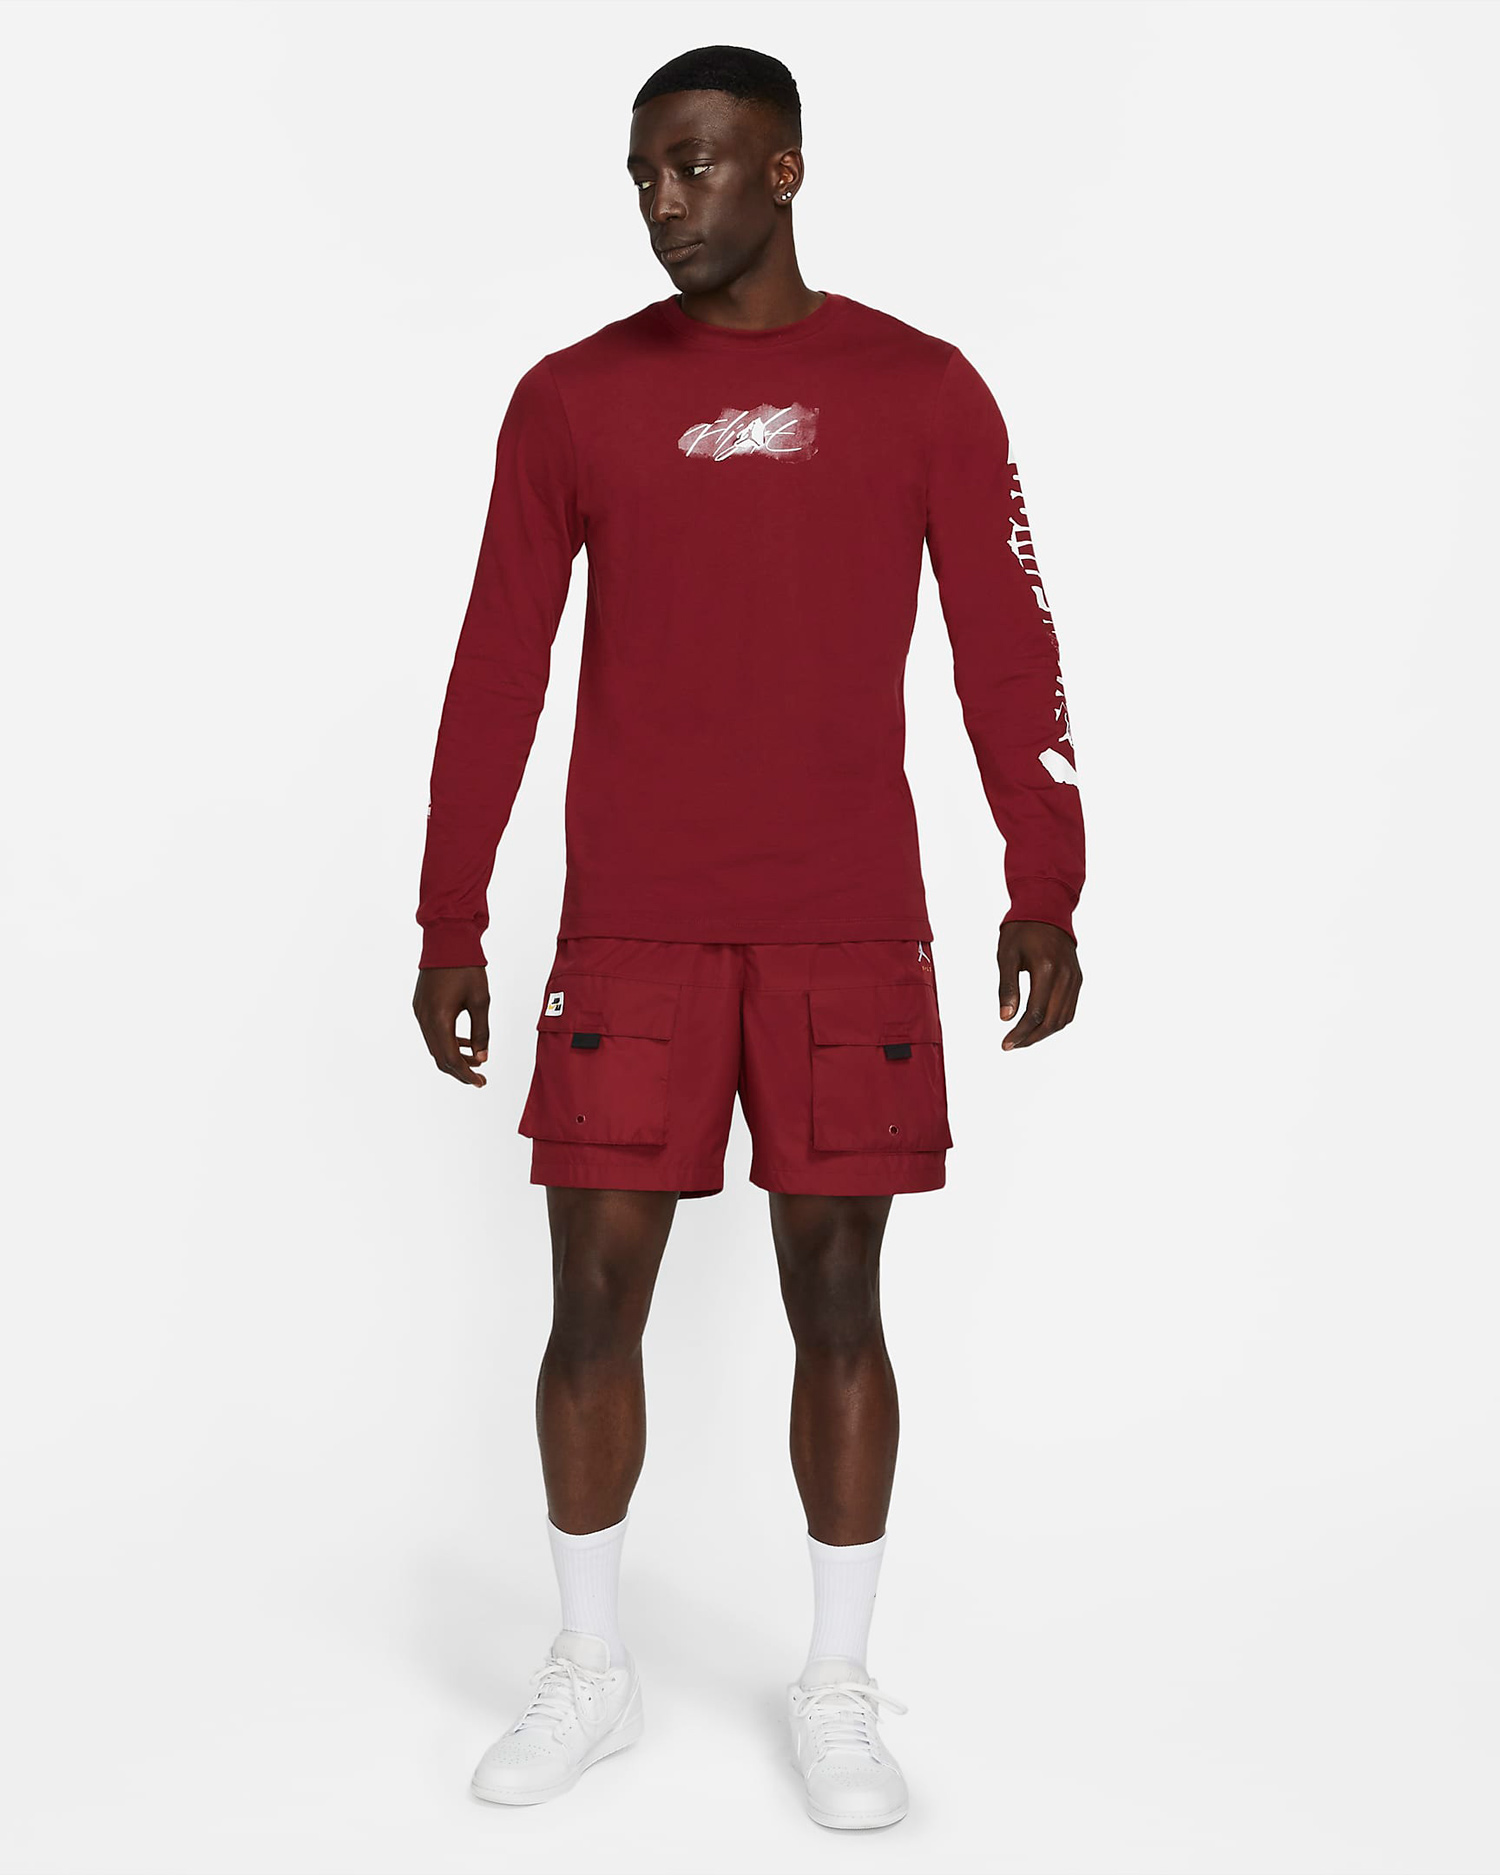 jordan-team-red-jumpman-flight-long-sleeve-shirt-shorts-outfit